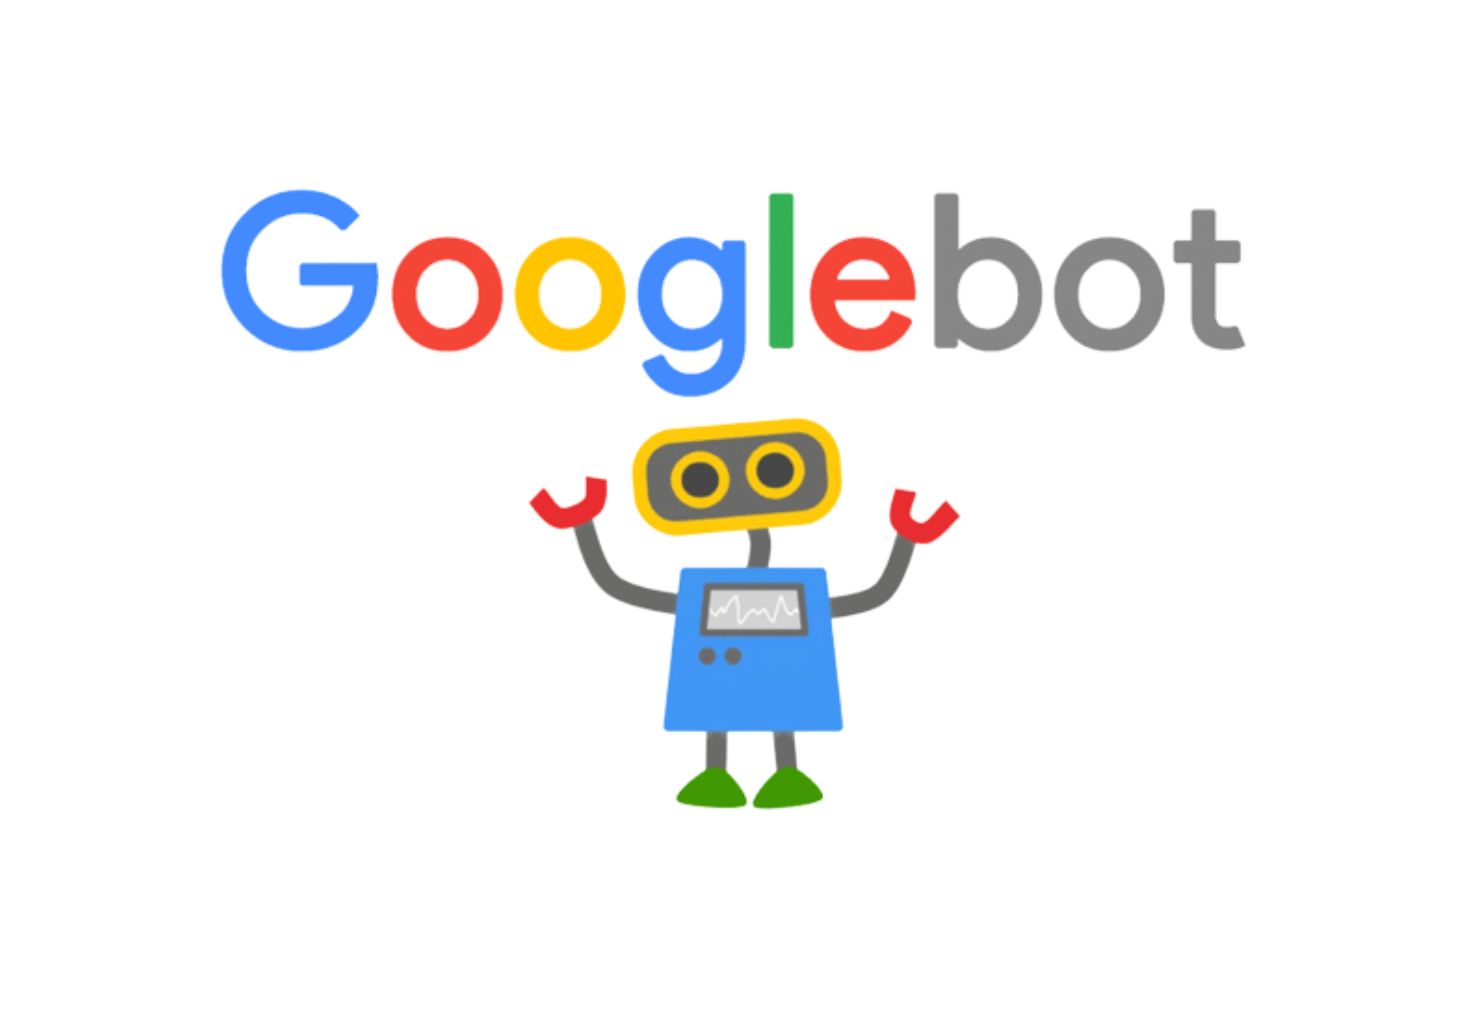 Googlebot updates about crawling 15MB webpage